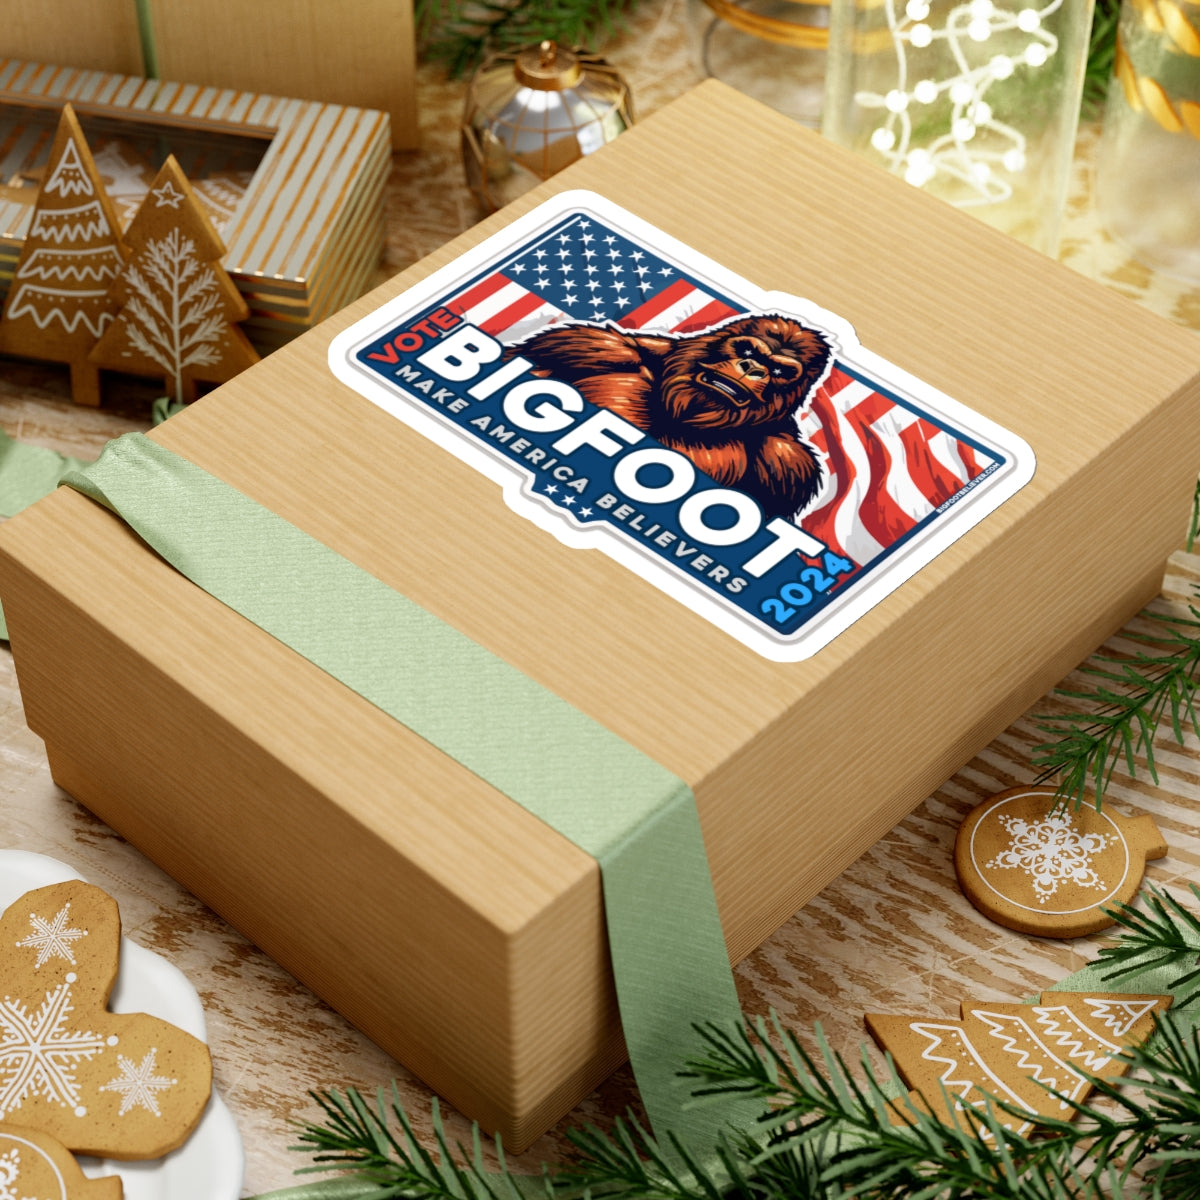 Bigfoot for President 2024 Kiss-Cut Stickers